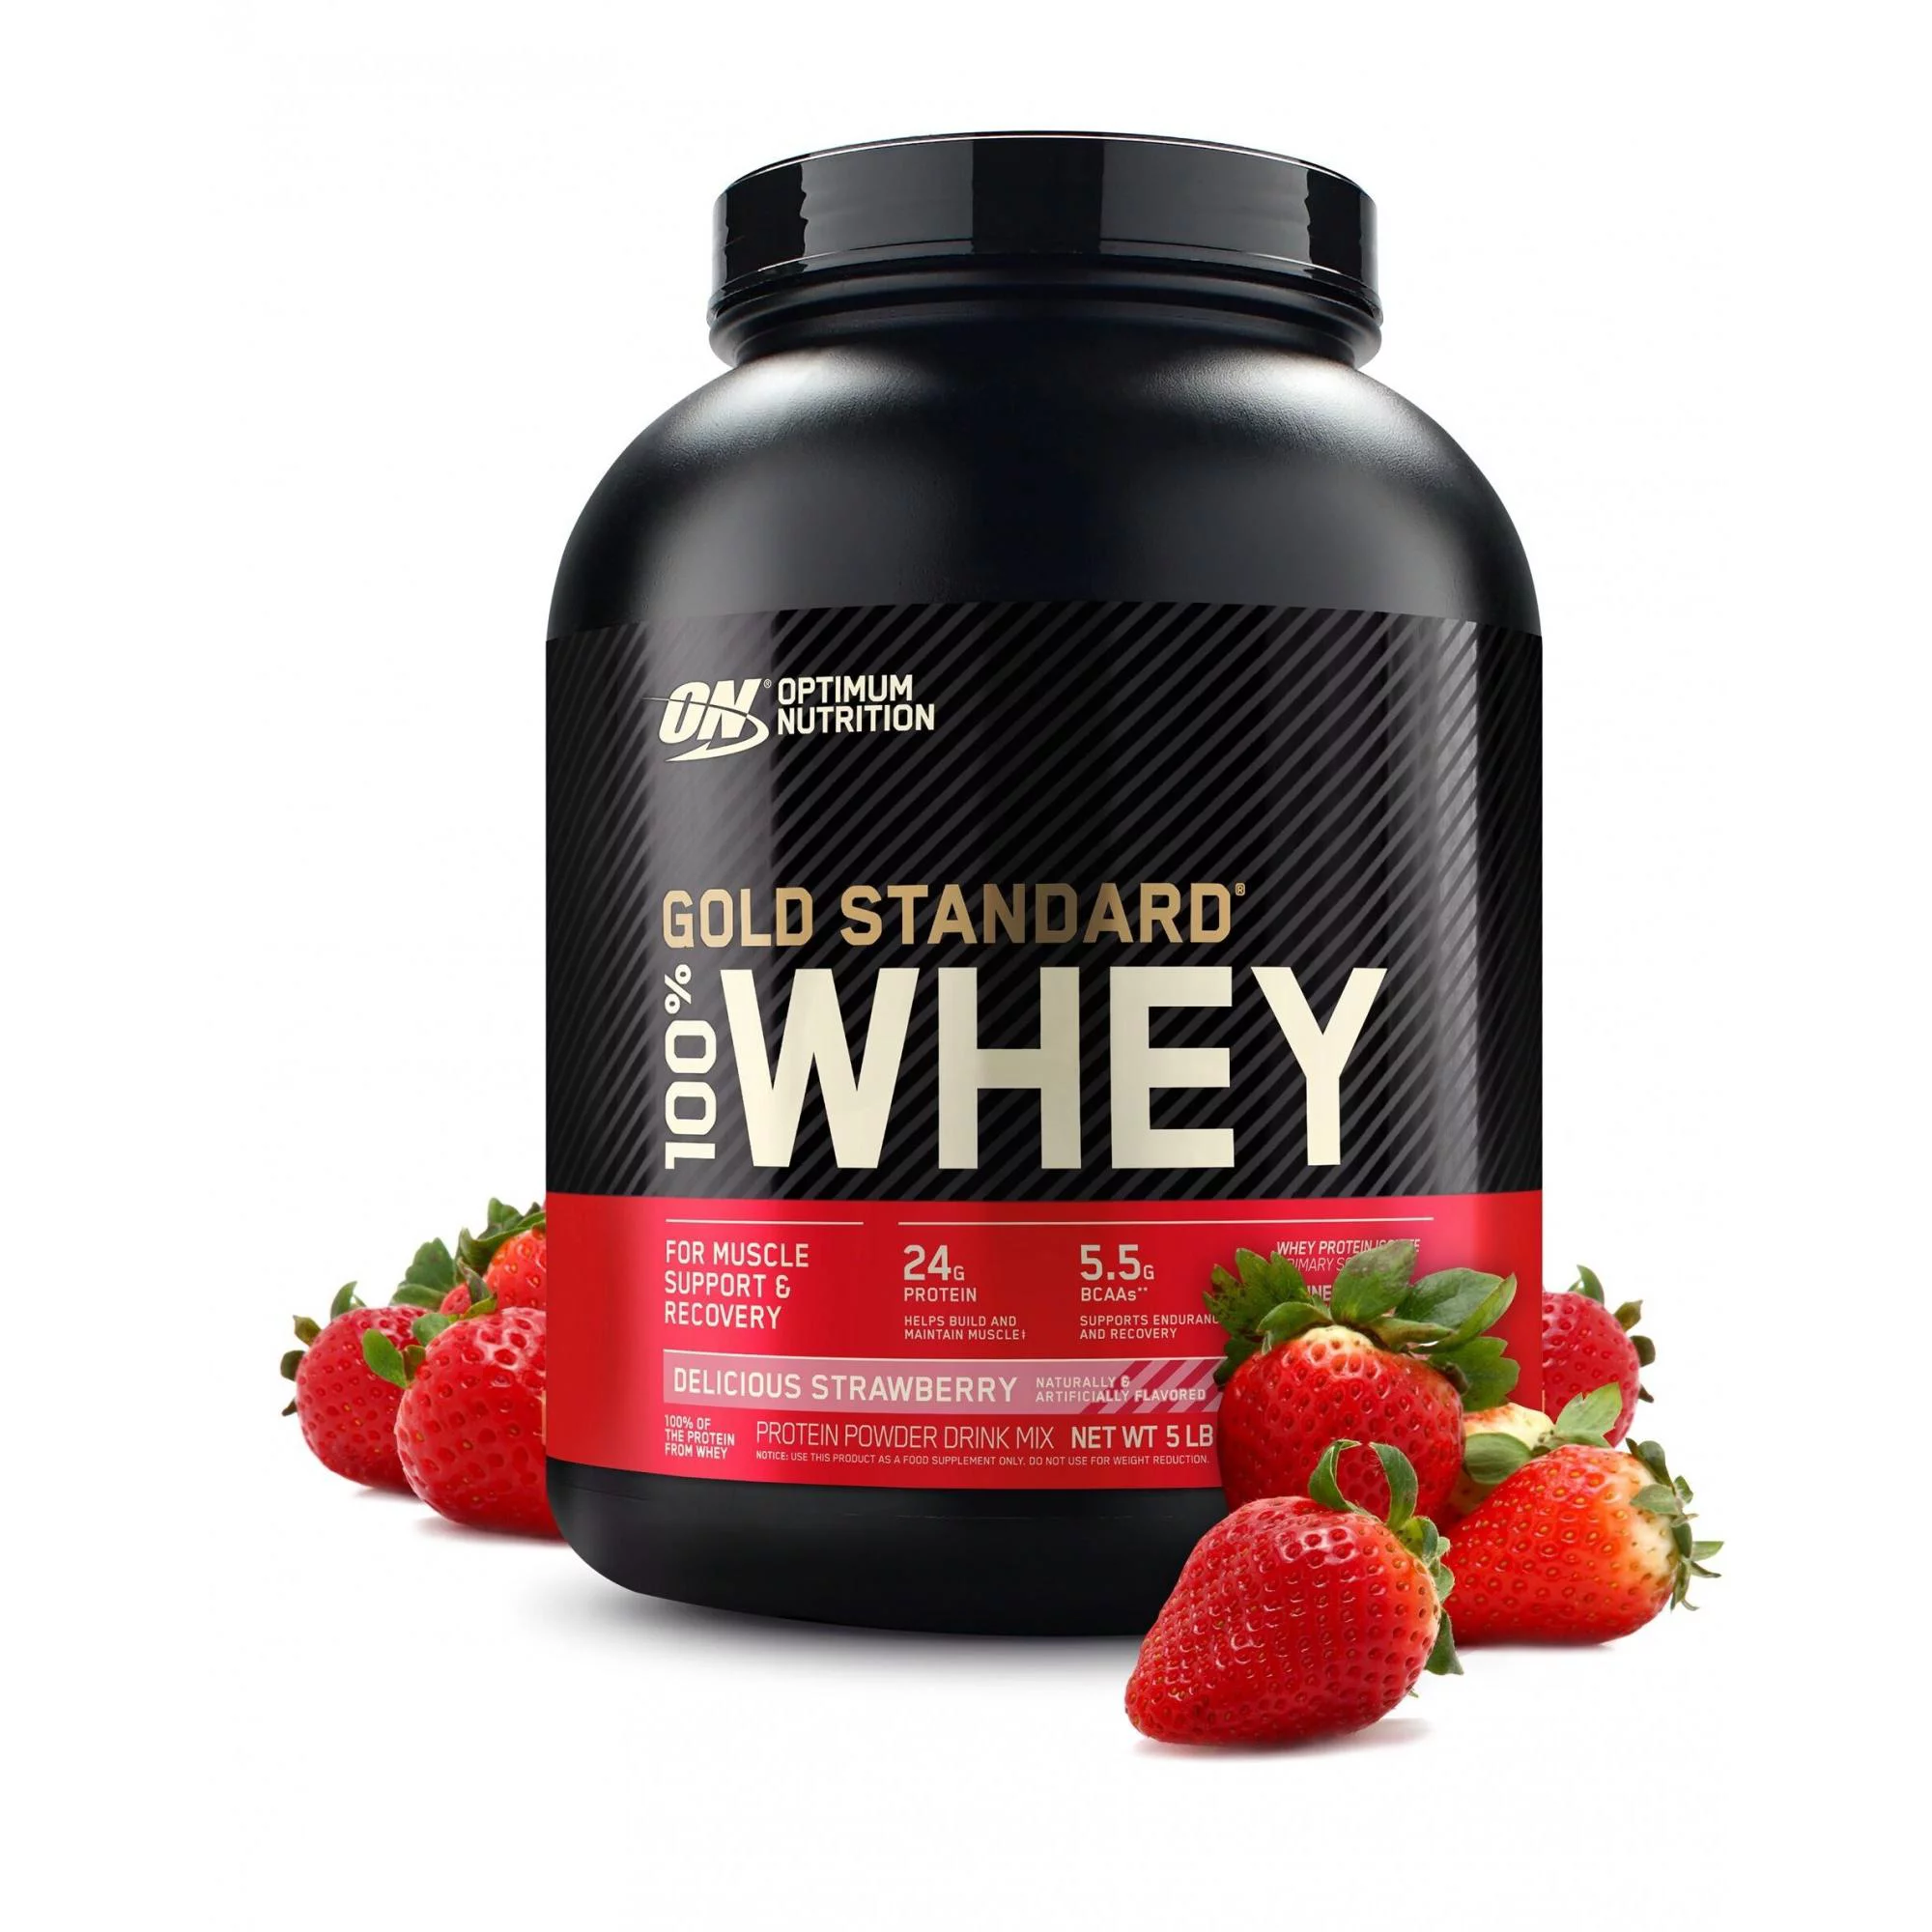 Optimum Nutrition, Gold Standard 100% Whey Protein Powder, 24g Protein, Delicious Strawberry, 4.99 lb